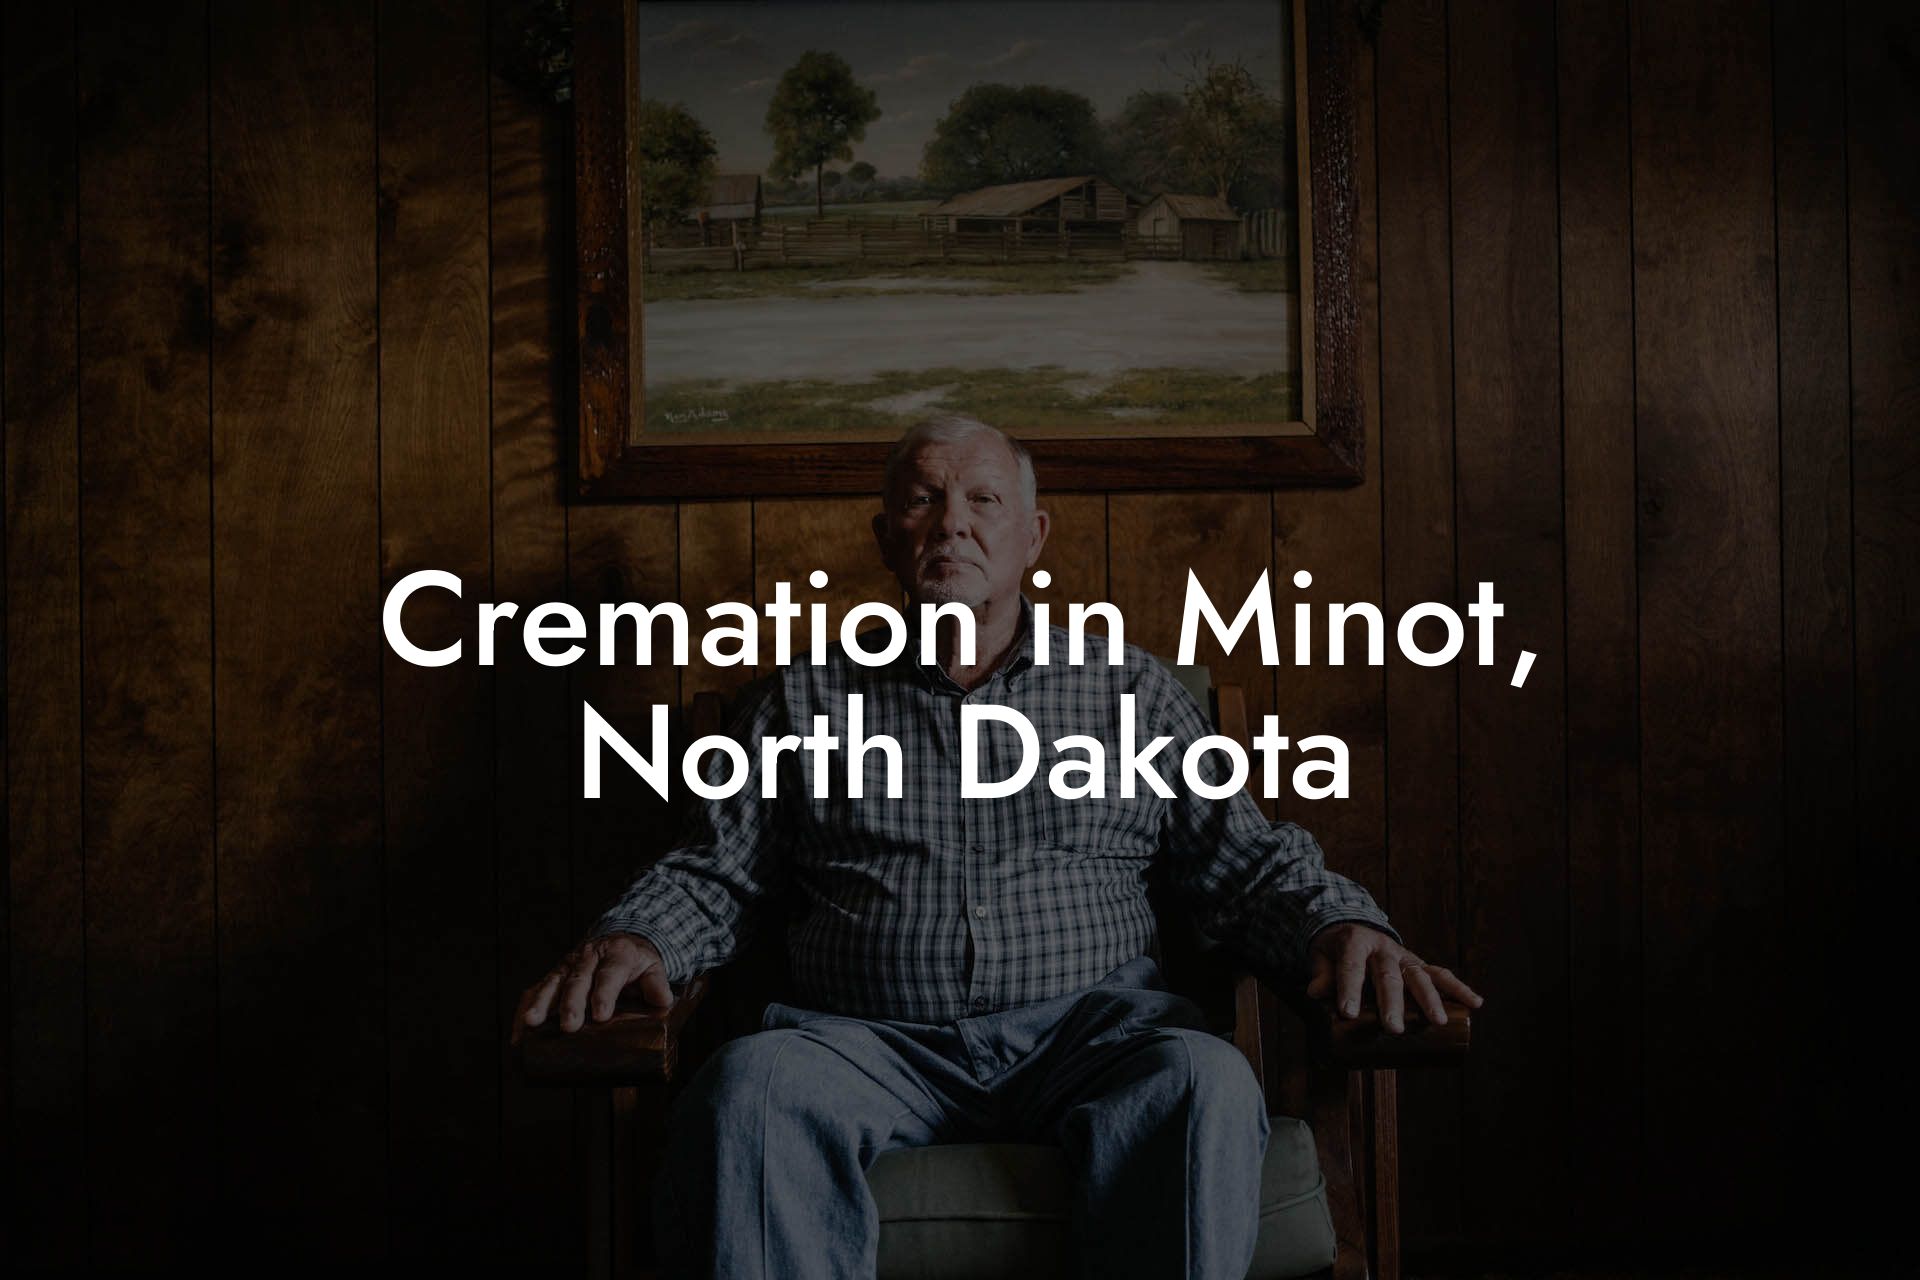 Cremation in Minot, North Dakota